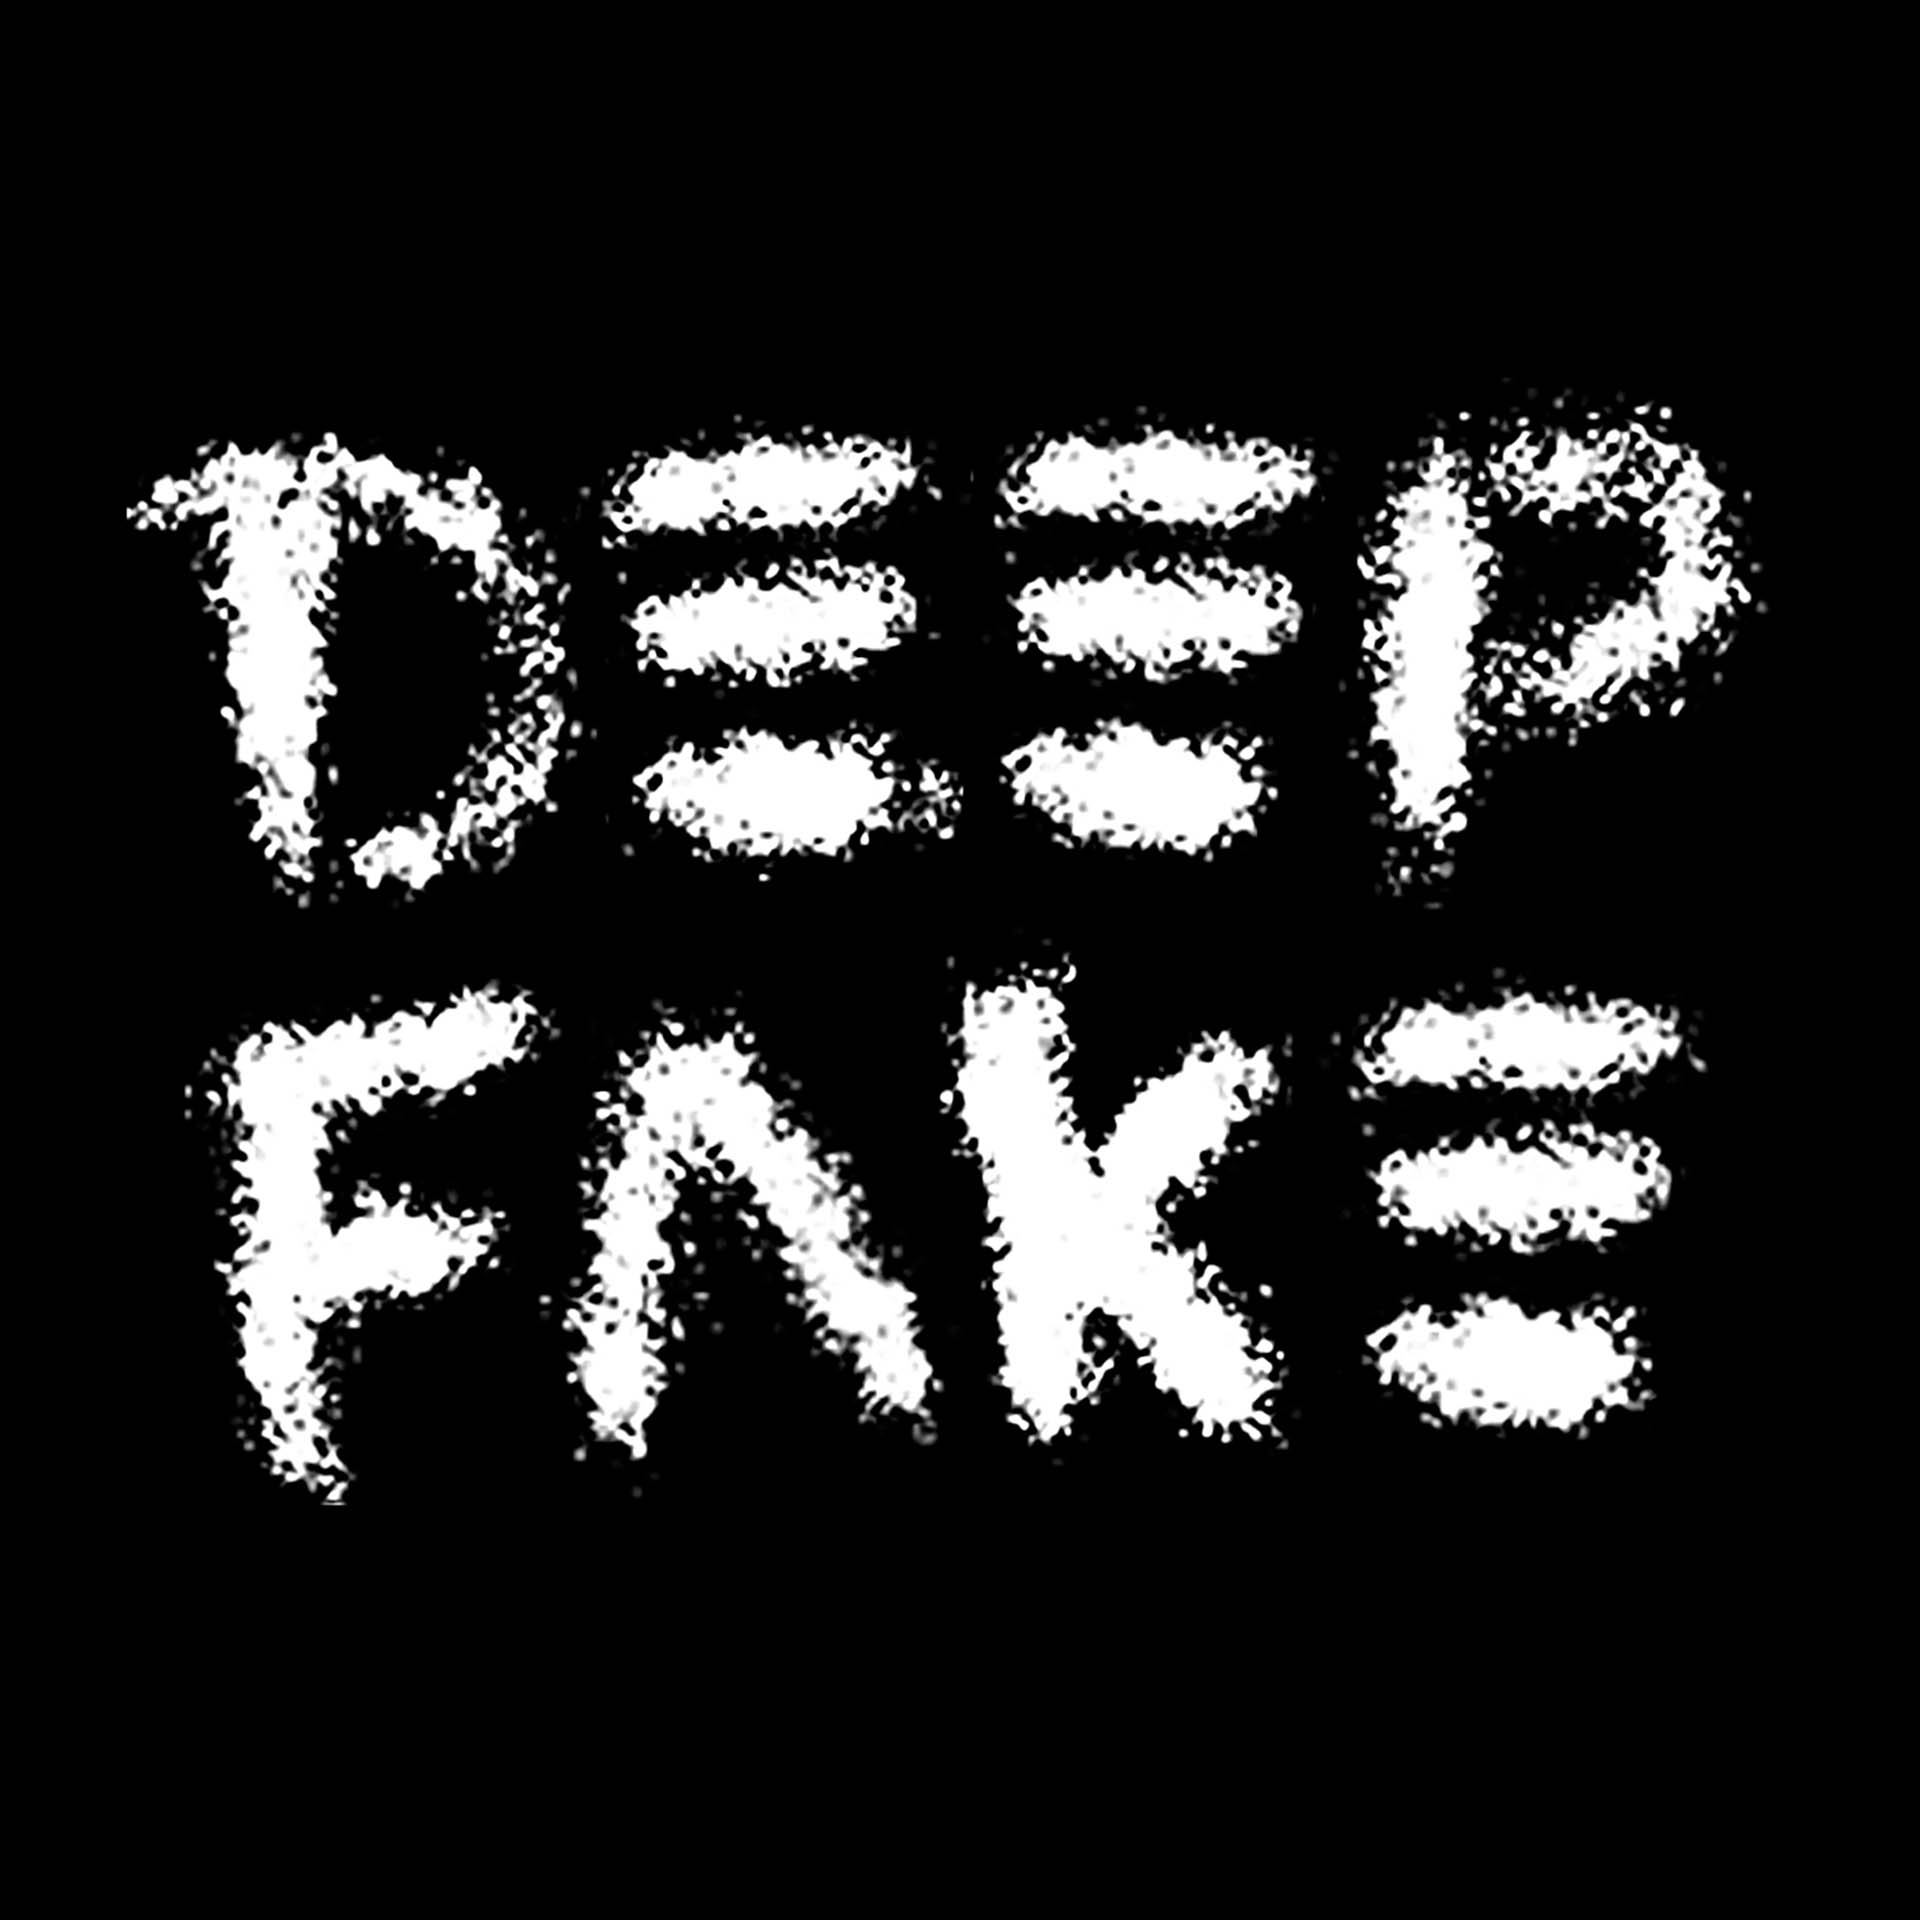 Deepfake - Fakeside EP